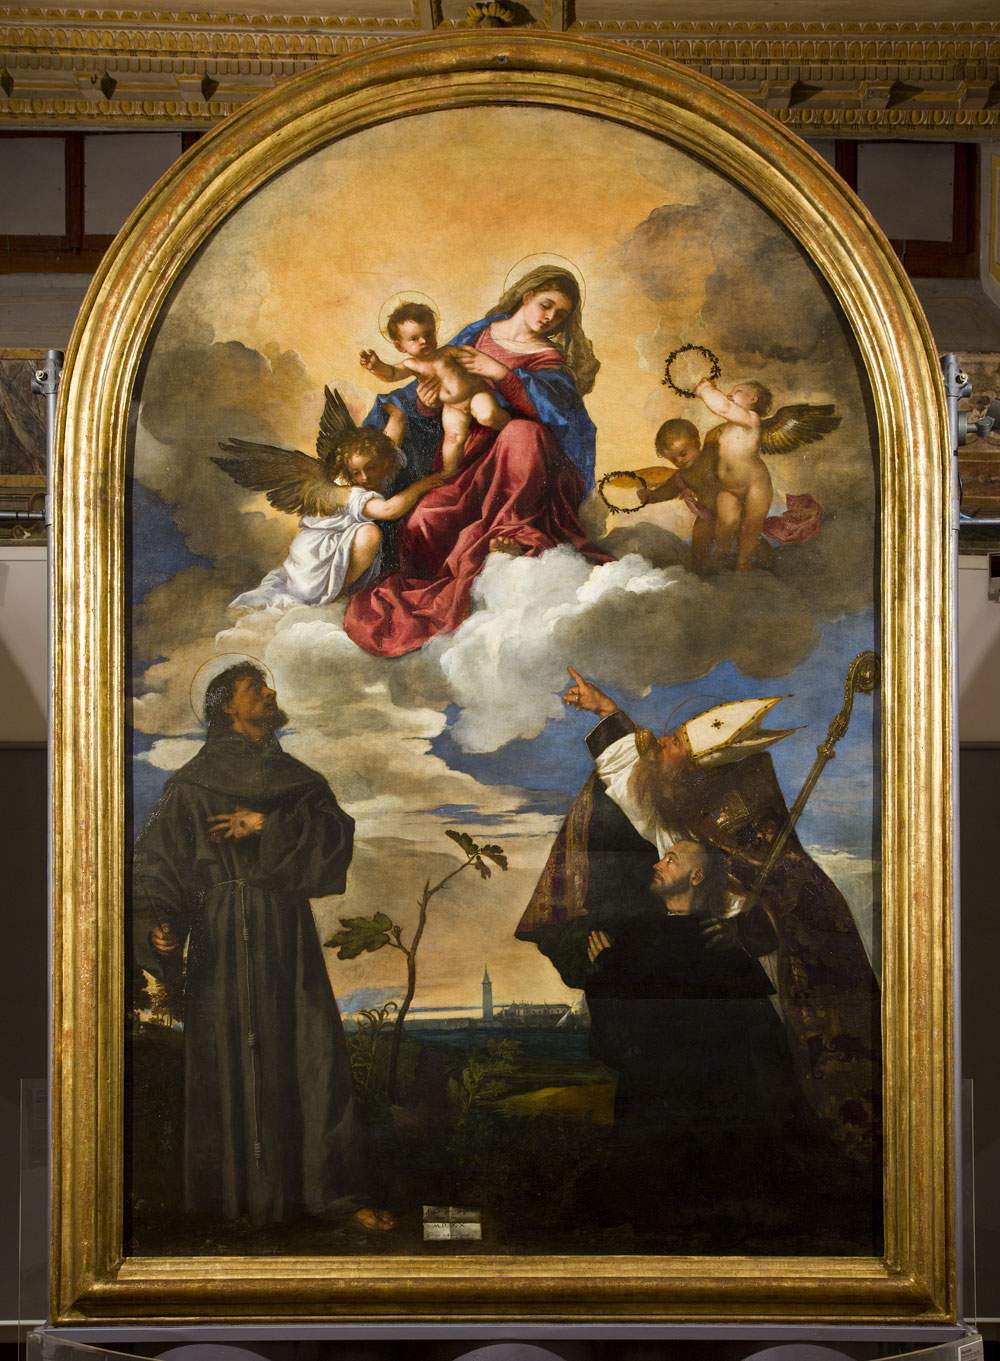 Titian & Titian compared in Ancona